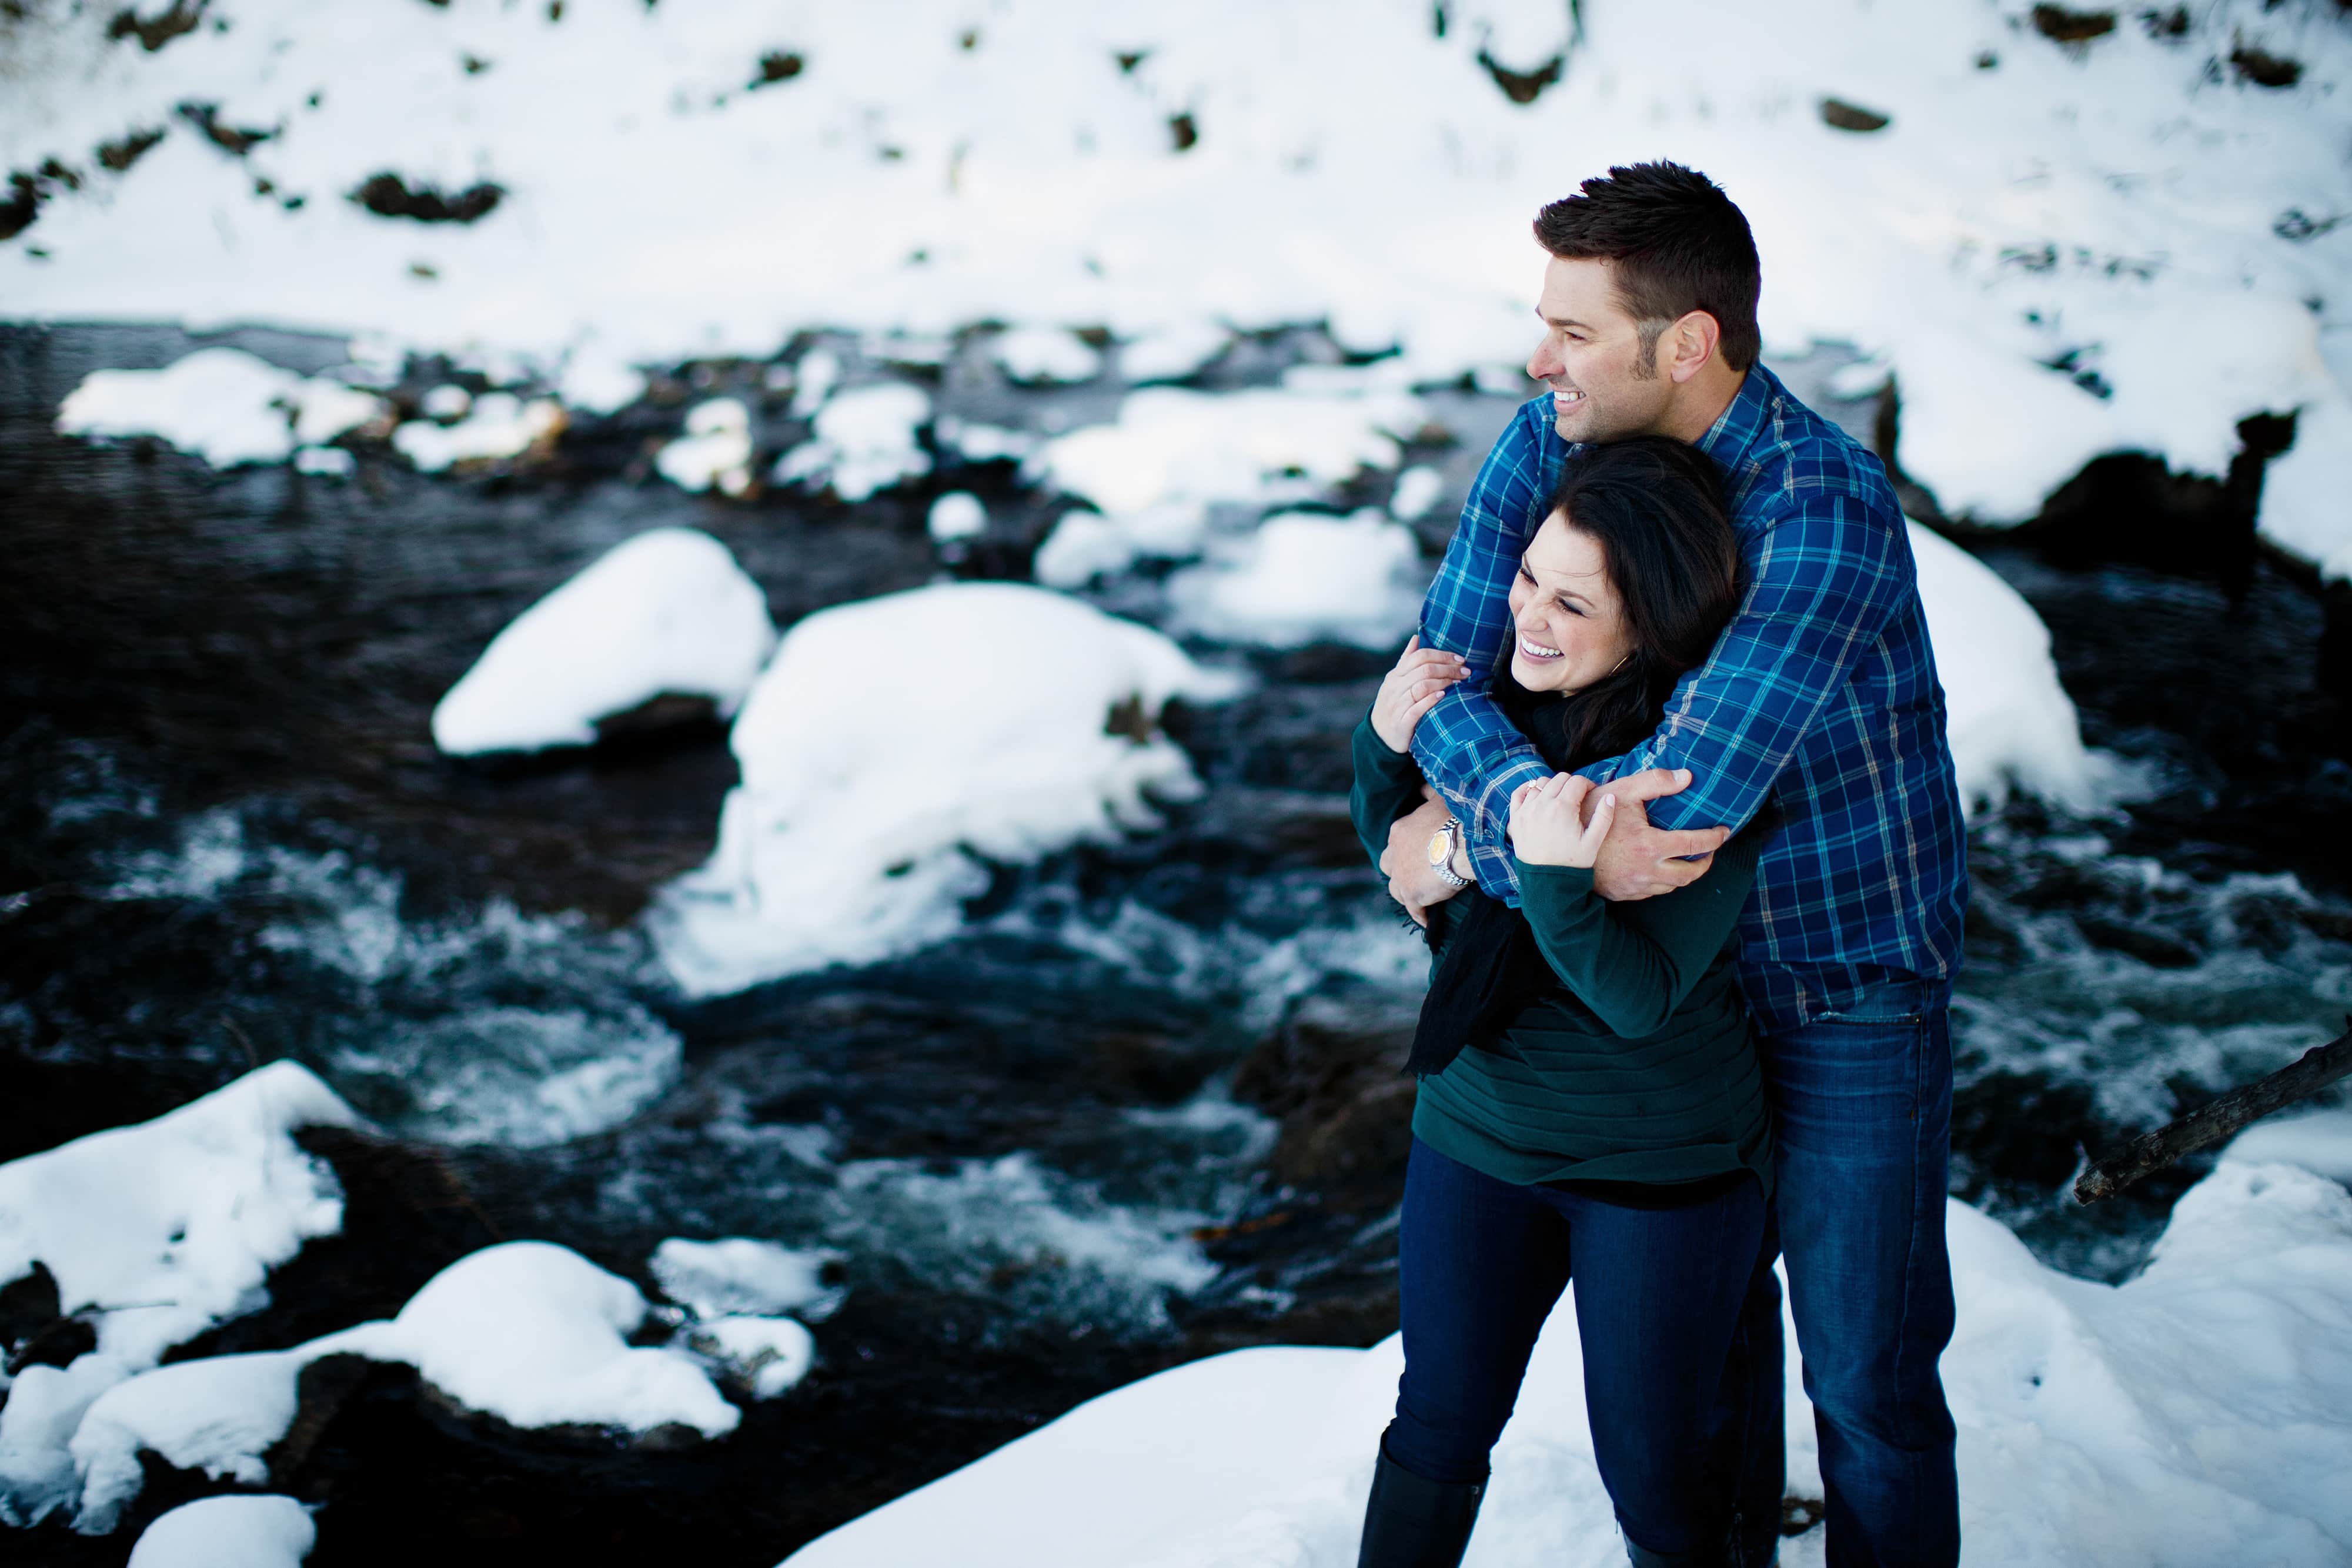 Jordan keeps Melissa warm near the snow bank of the Bear Creek in Evergreen